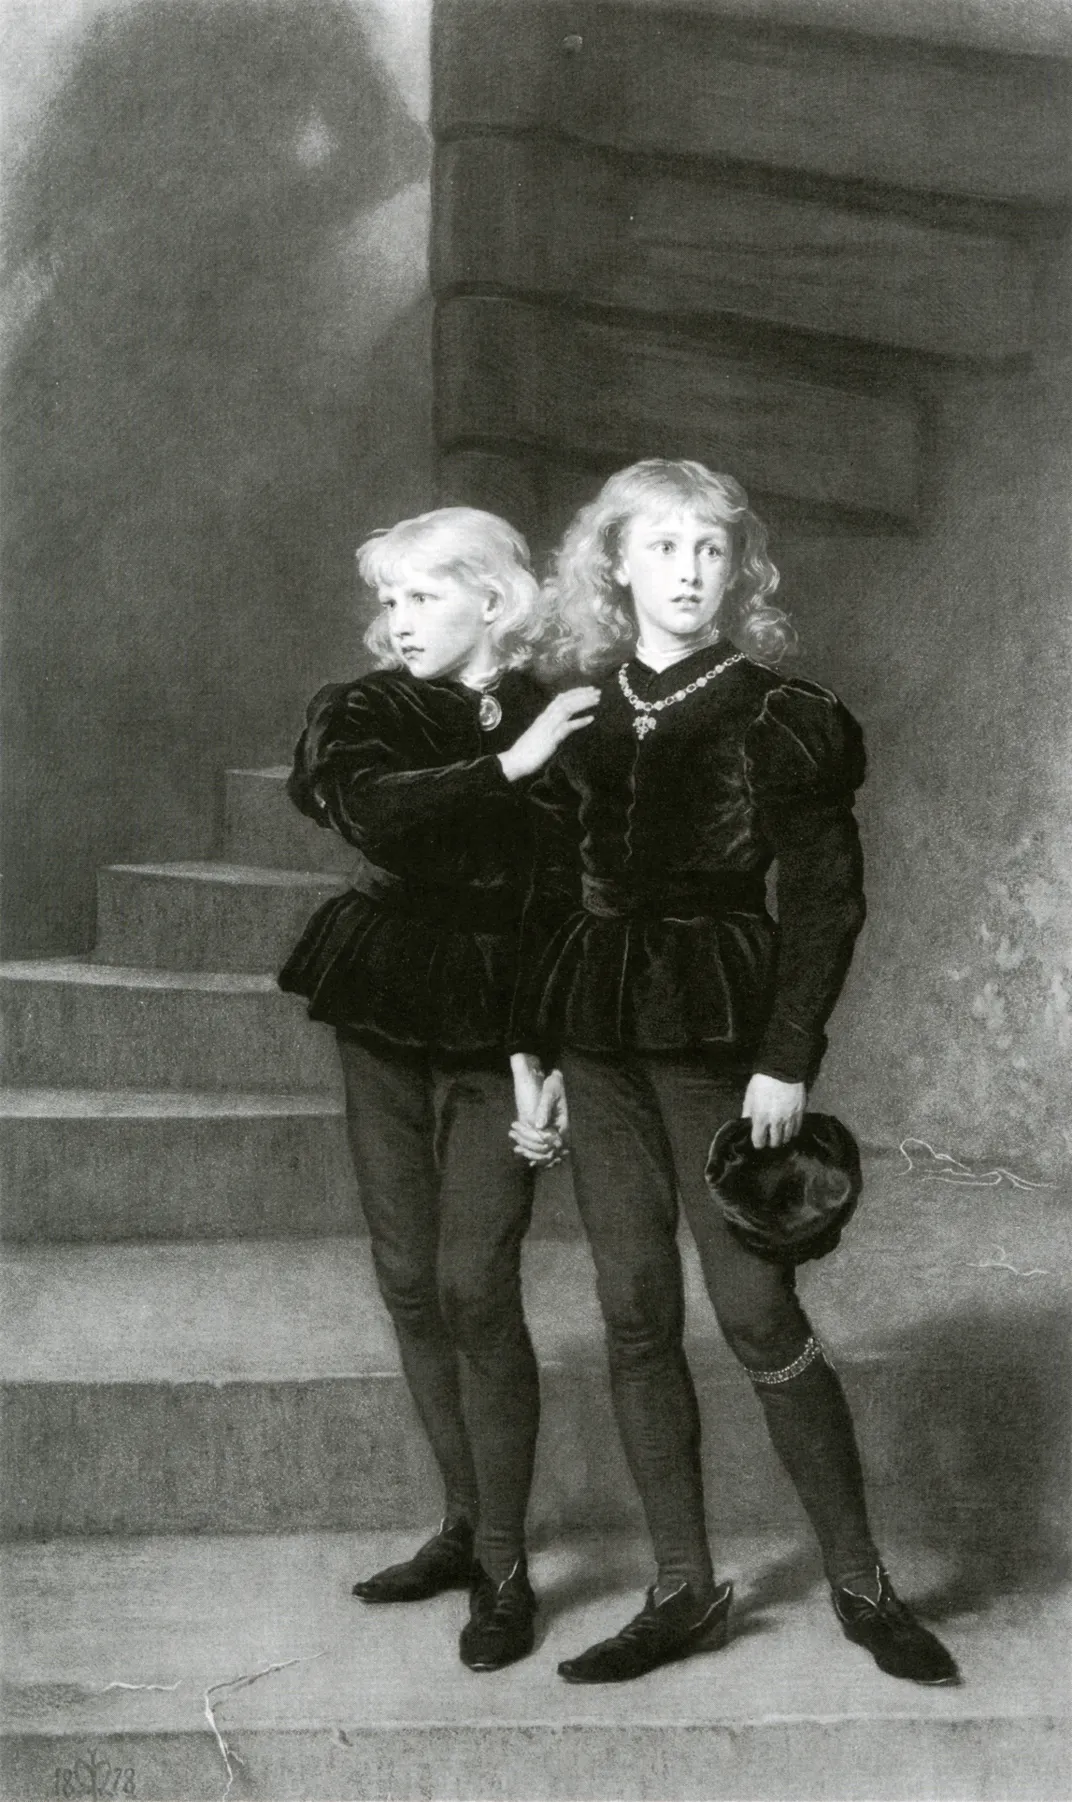 John Everett Millais' Princes in the Tower